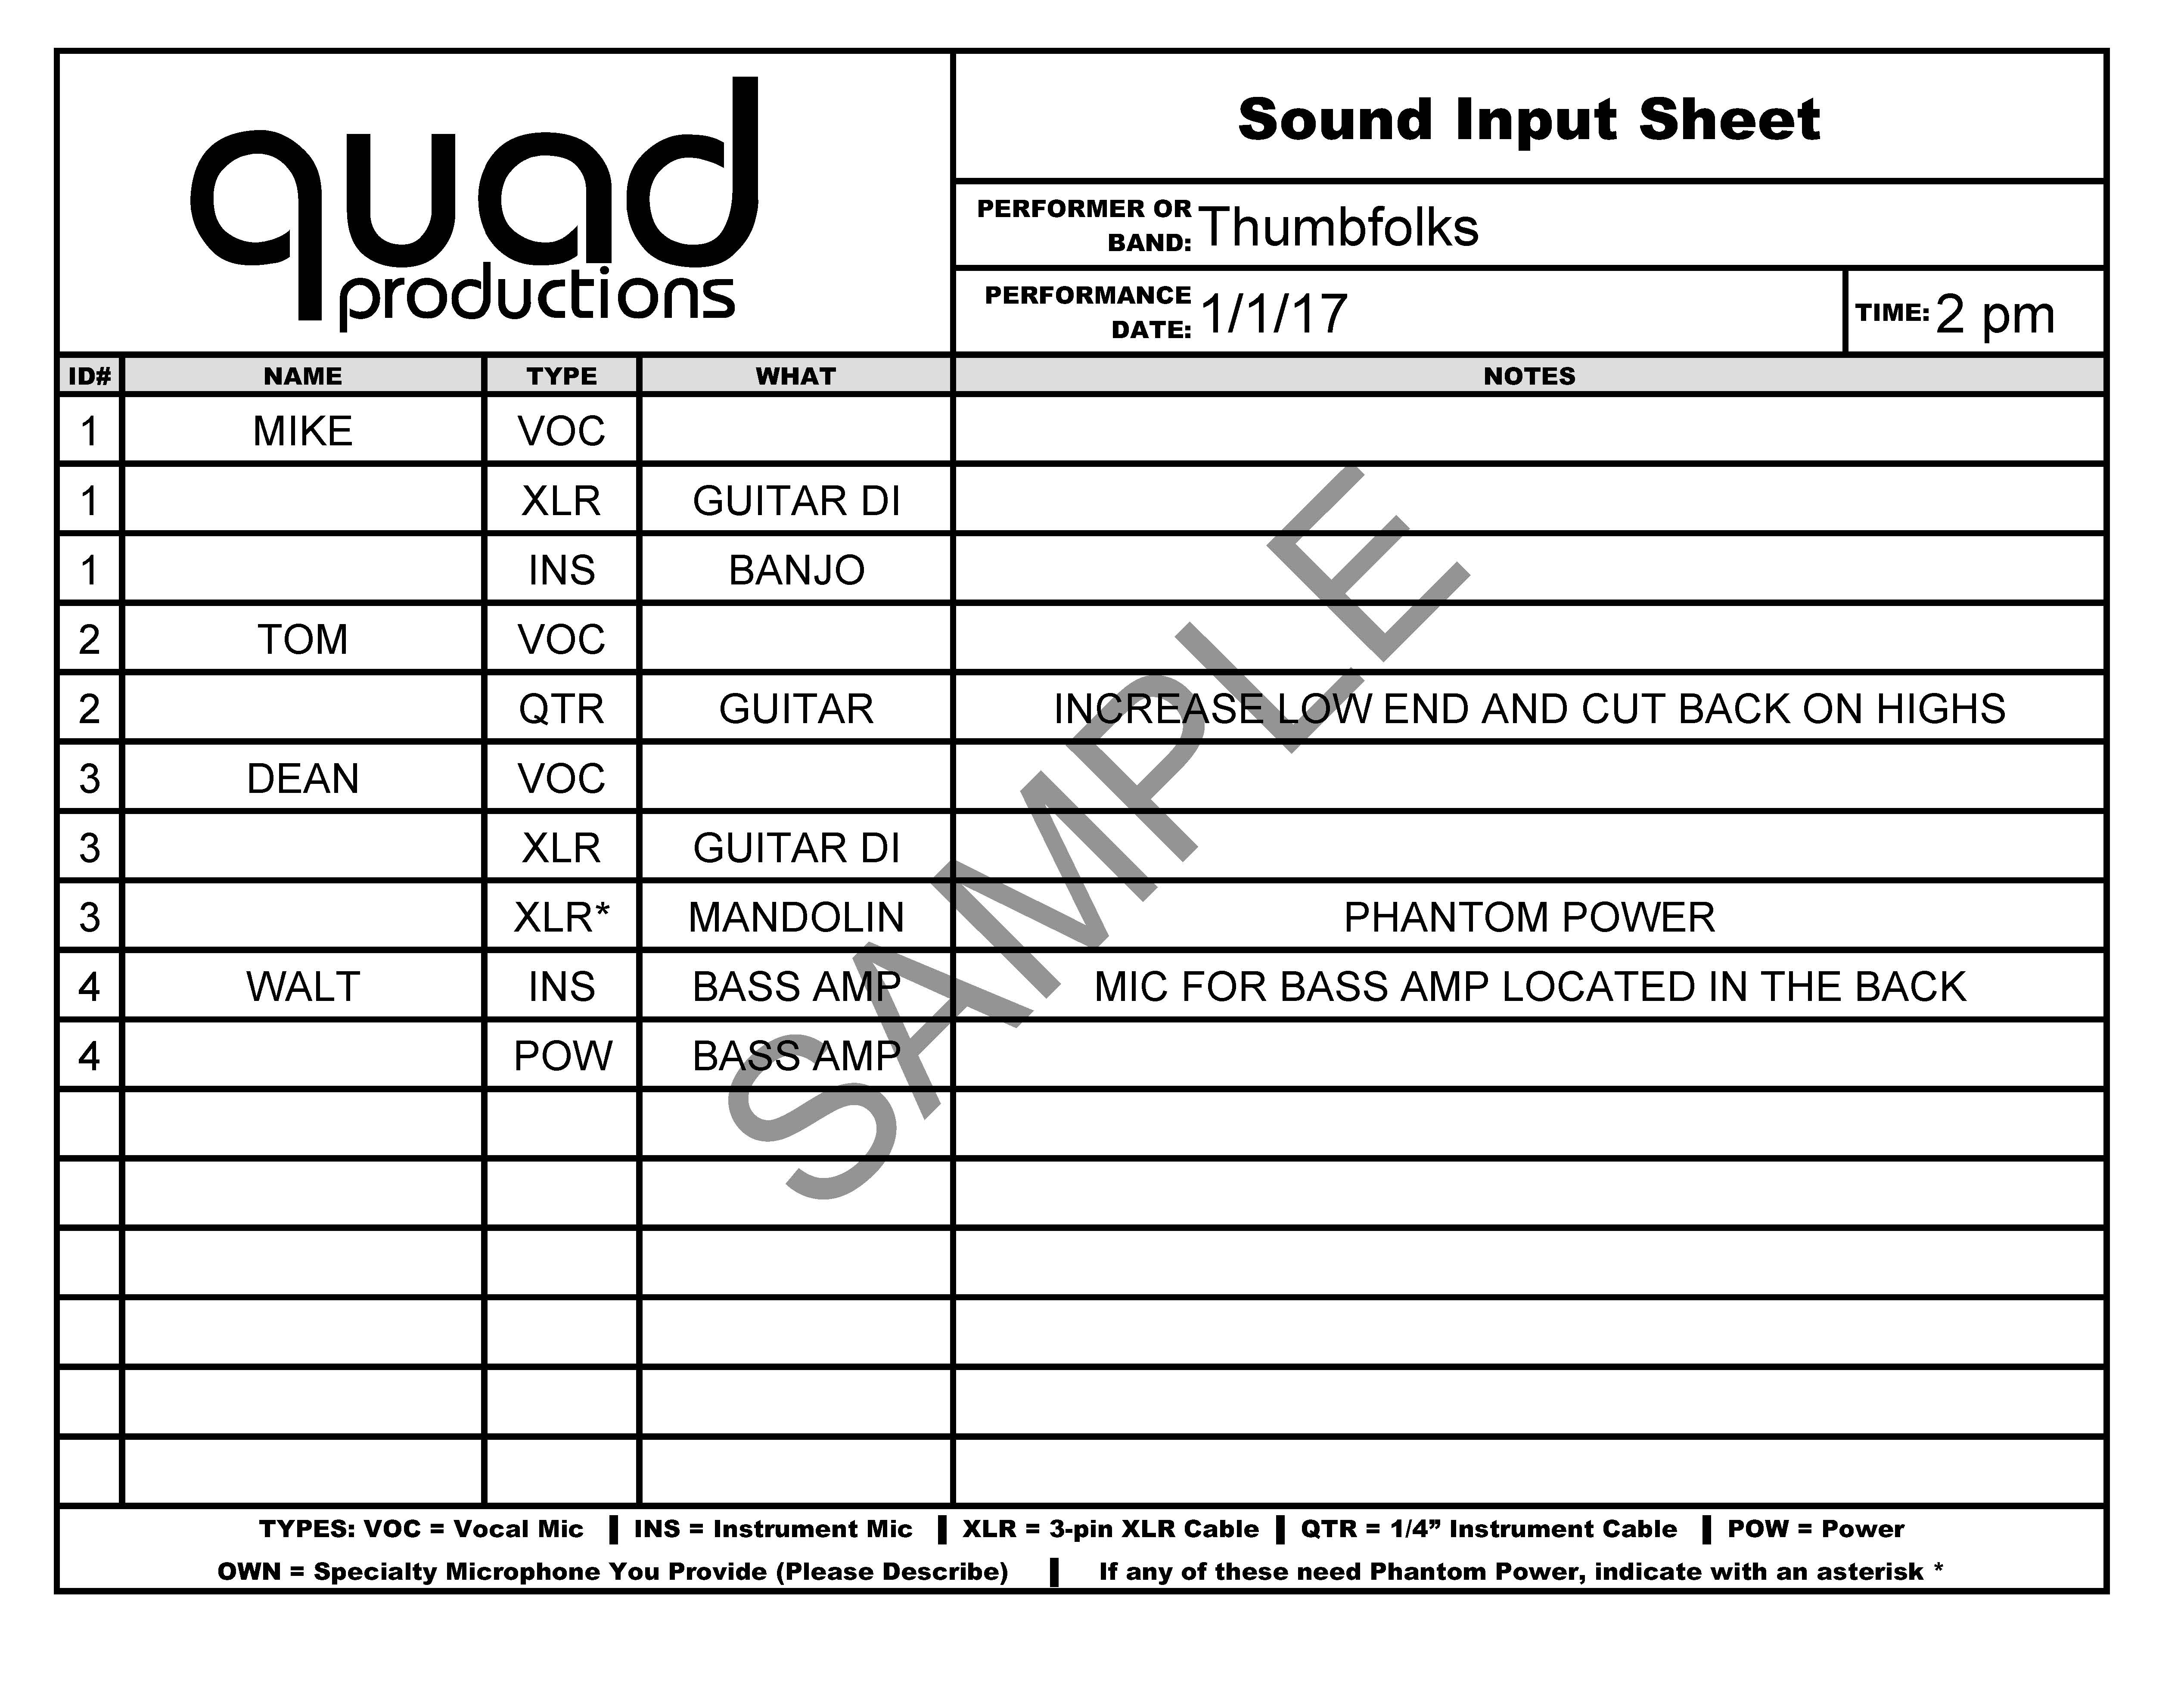 Sample Sound Input Sheet